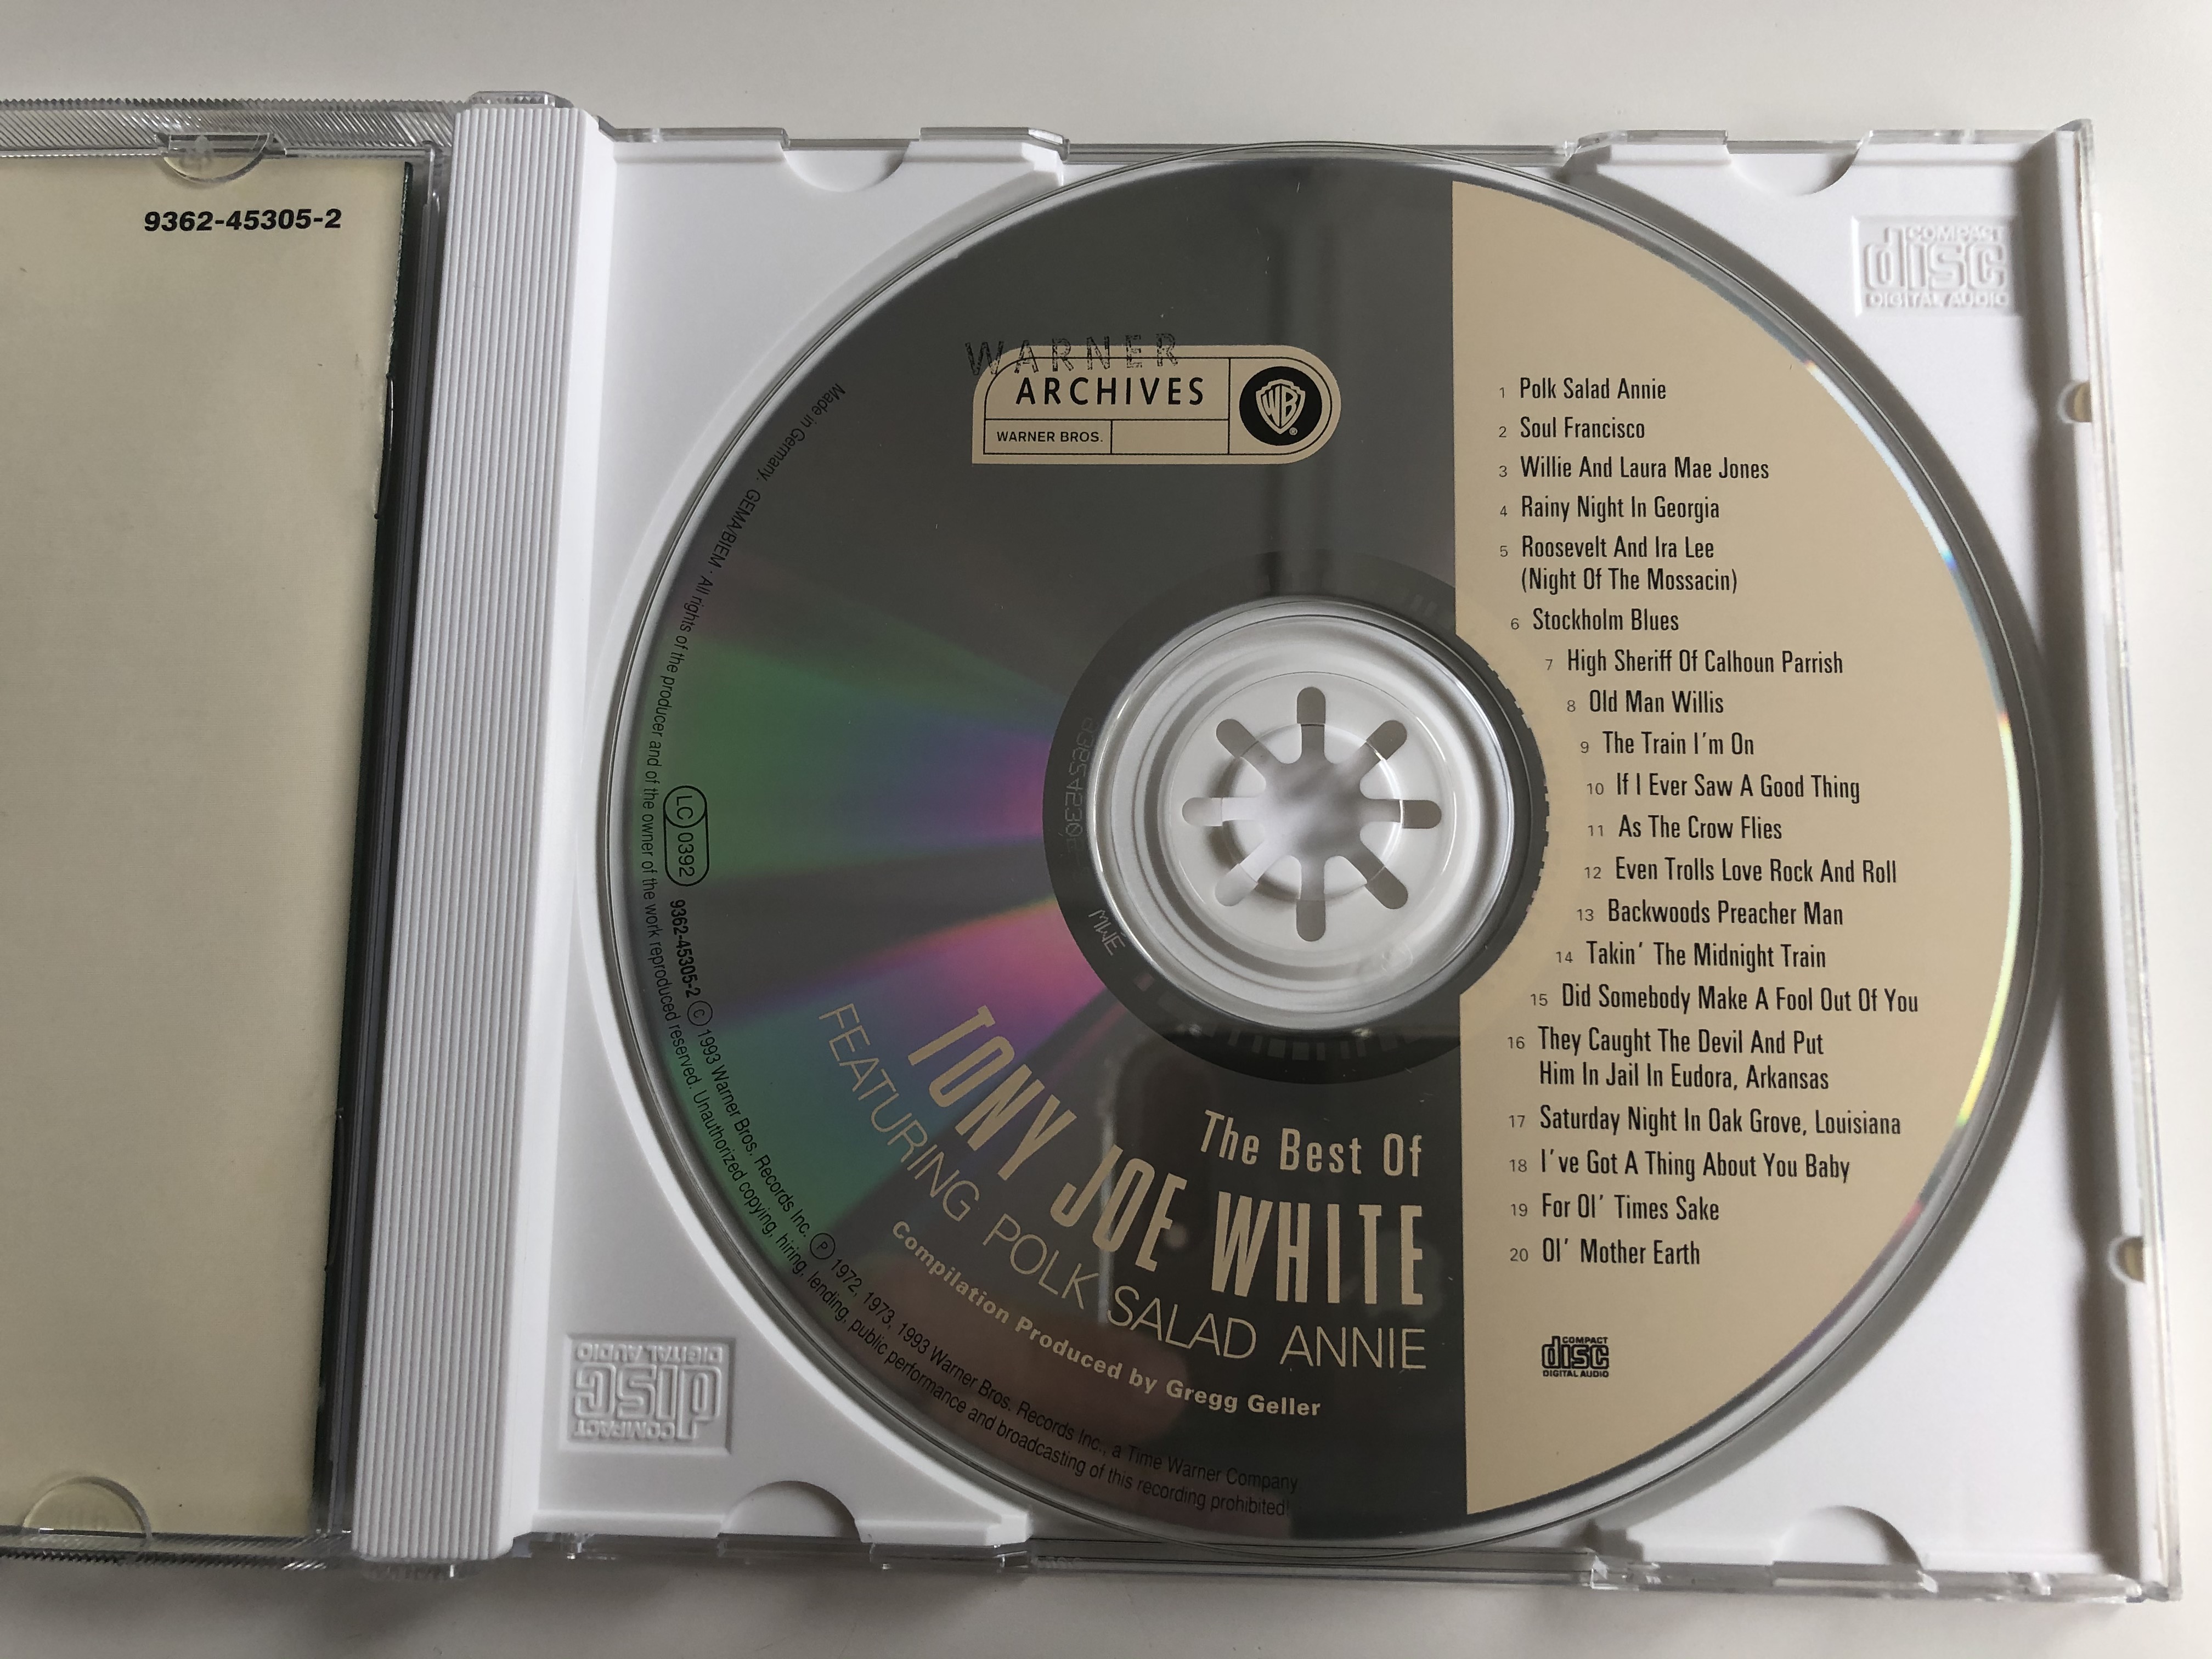 the-best-of-tony-joe-white-featuring-polk-salad-annie-warner-bros.-records-audio-cd-1993-9362-45305-2-9-.jpg